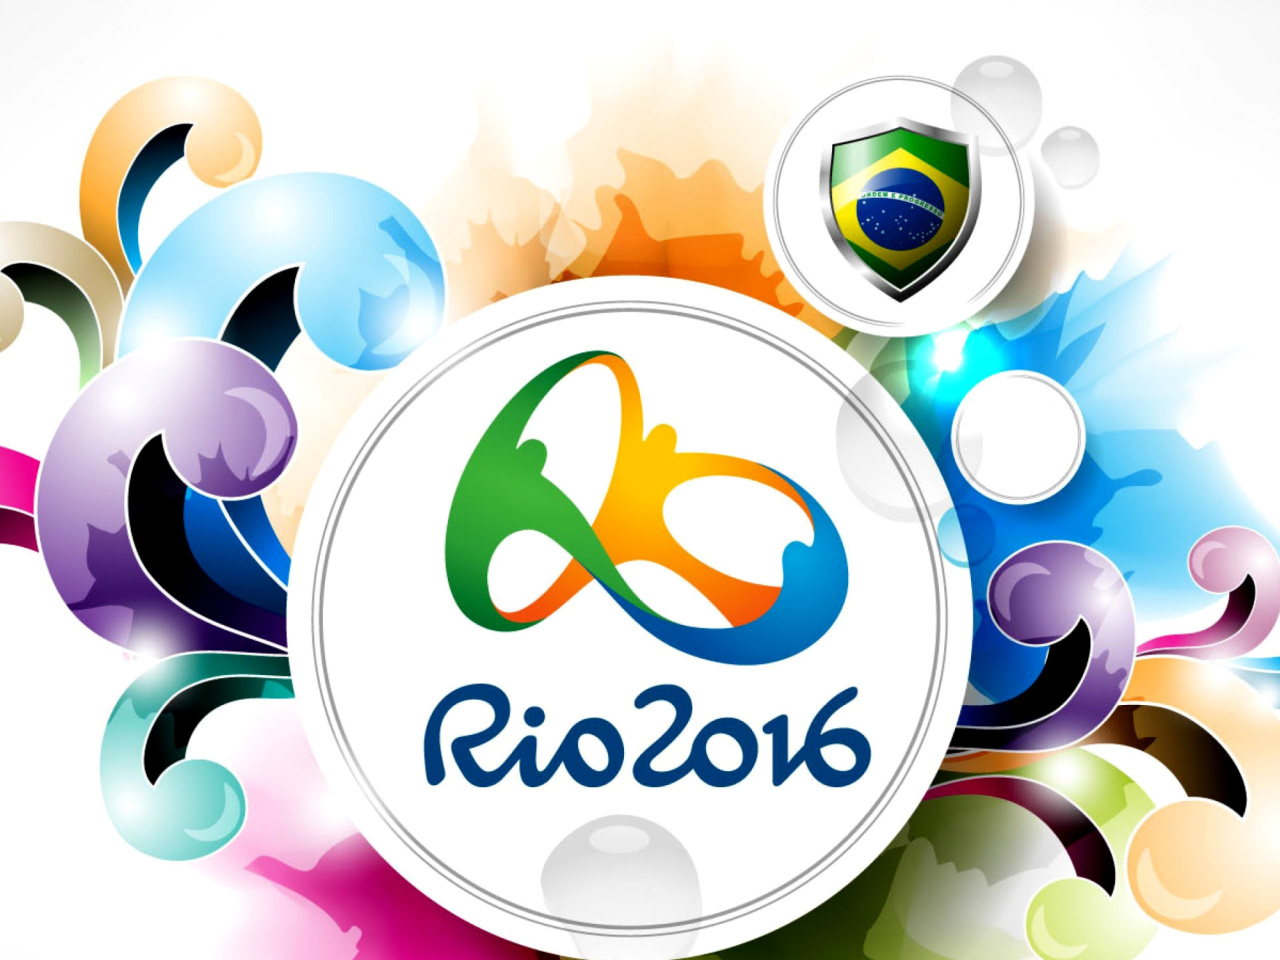 Olympic Games Rio 2016 wallpaper 1280x960